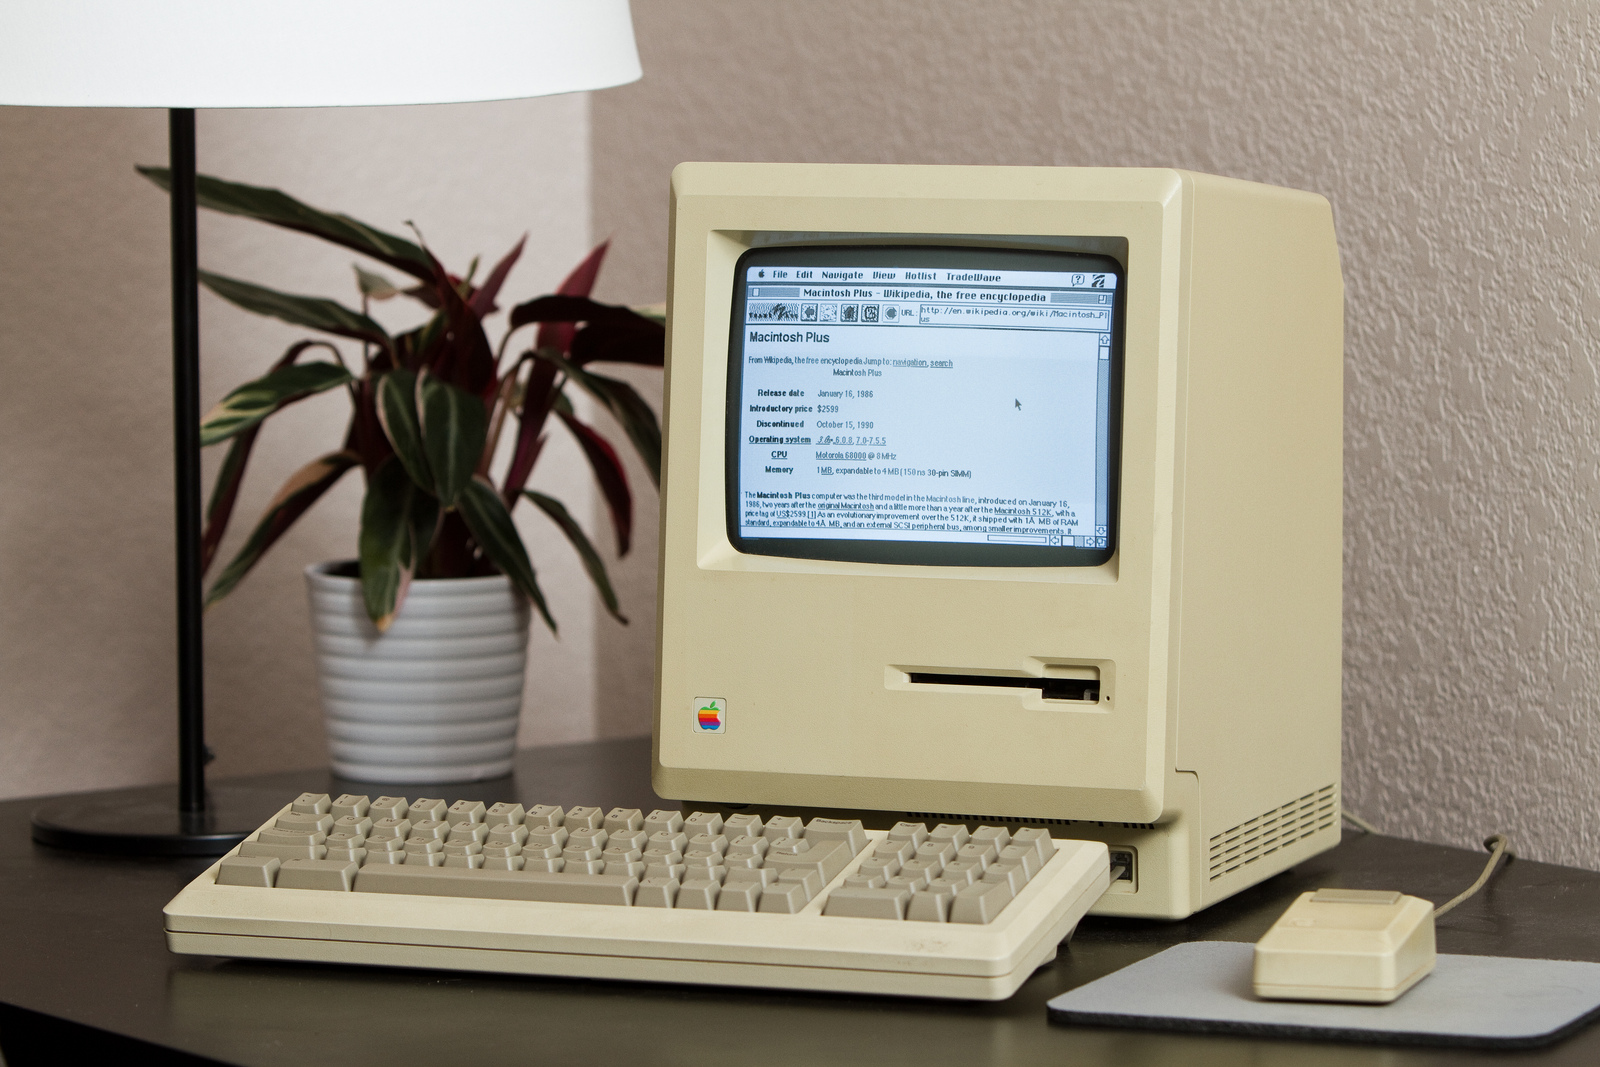 Mac Plus terhubung ke internet